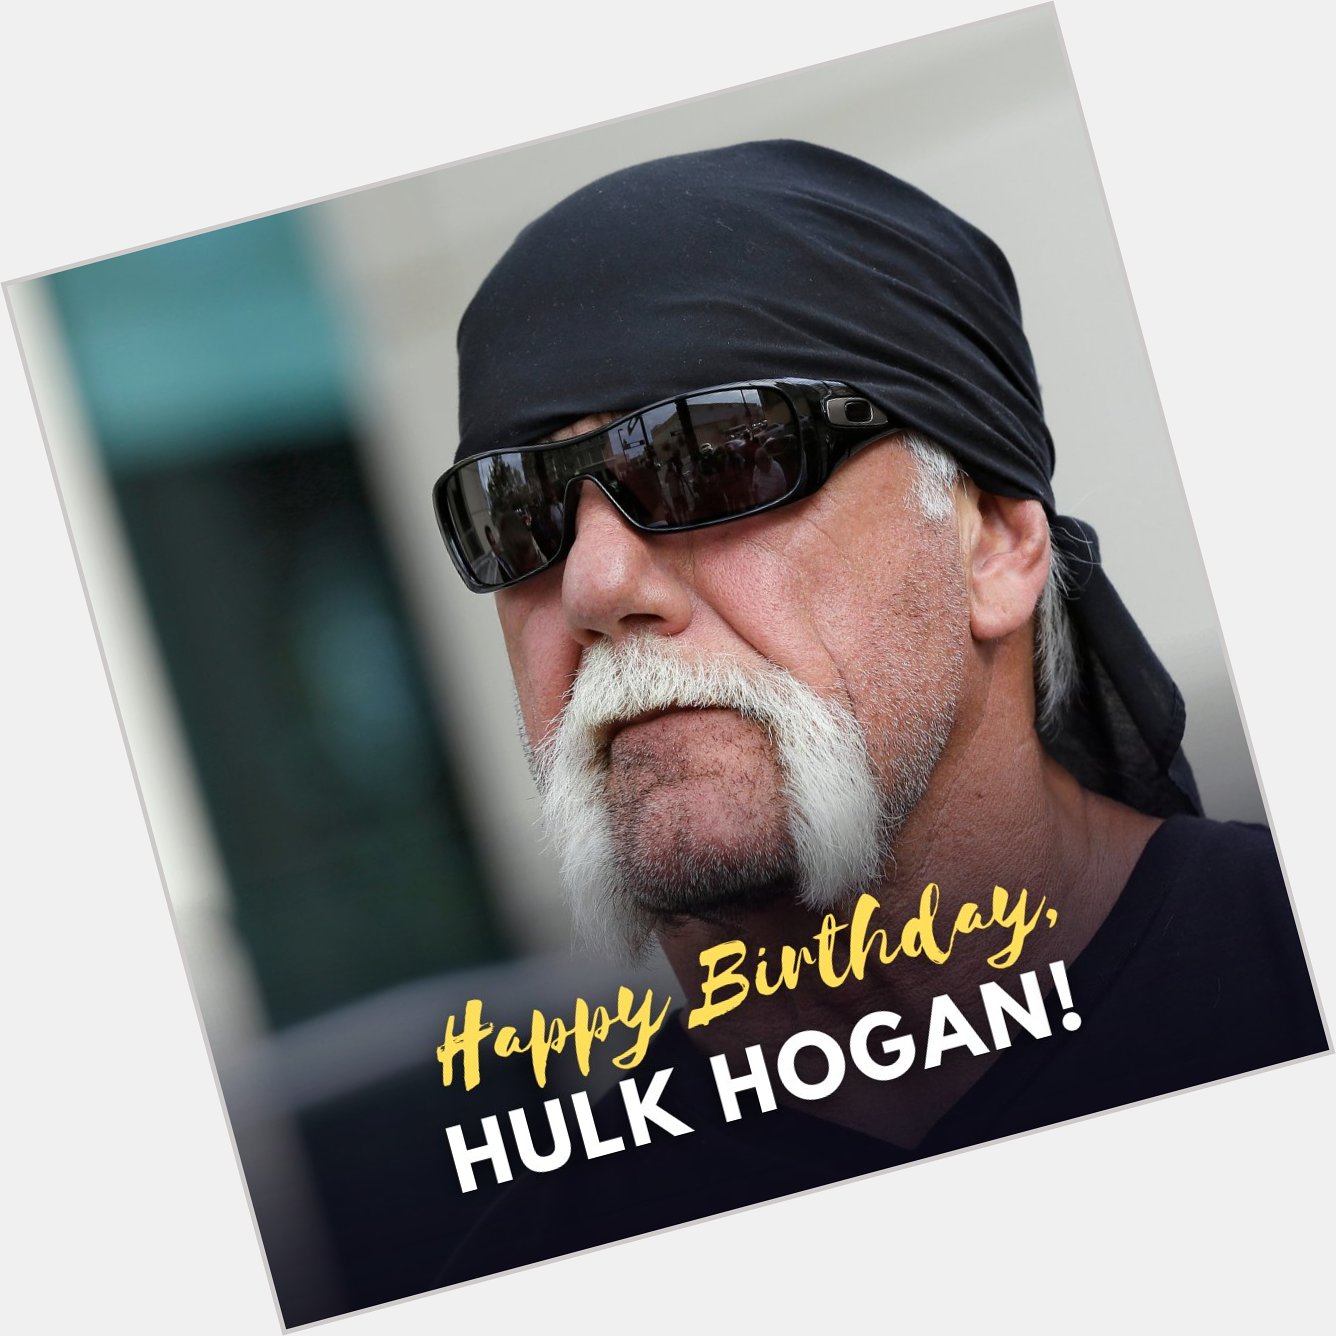 American pro wrestling legend Hulk Hogan turns 68 today.
HAPPY BIRTHDAY, BROTHER! 